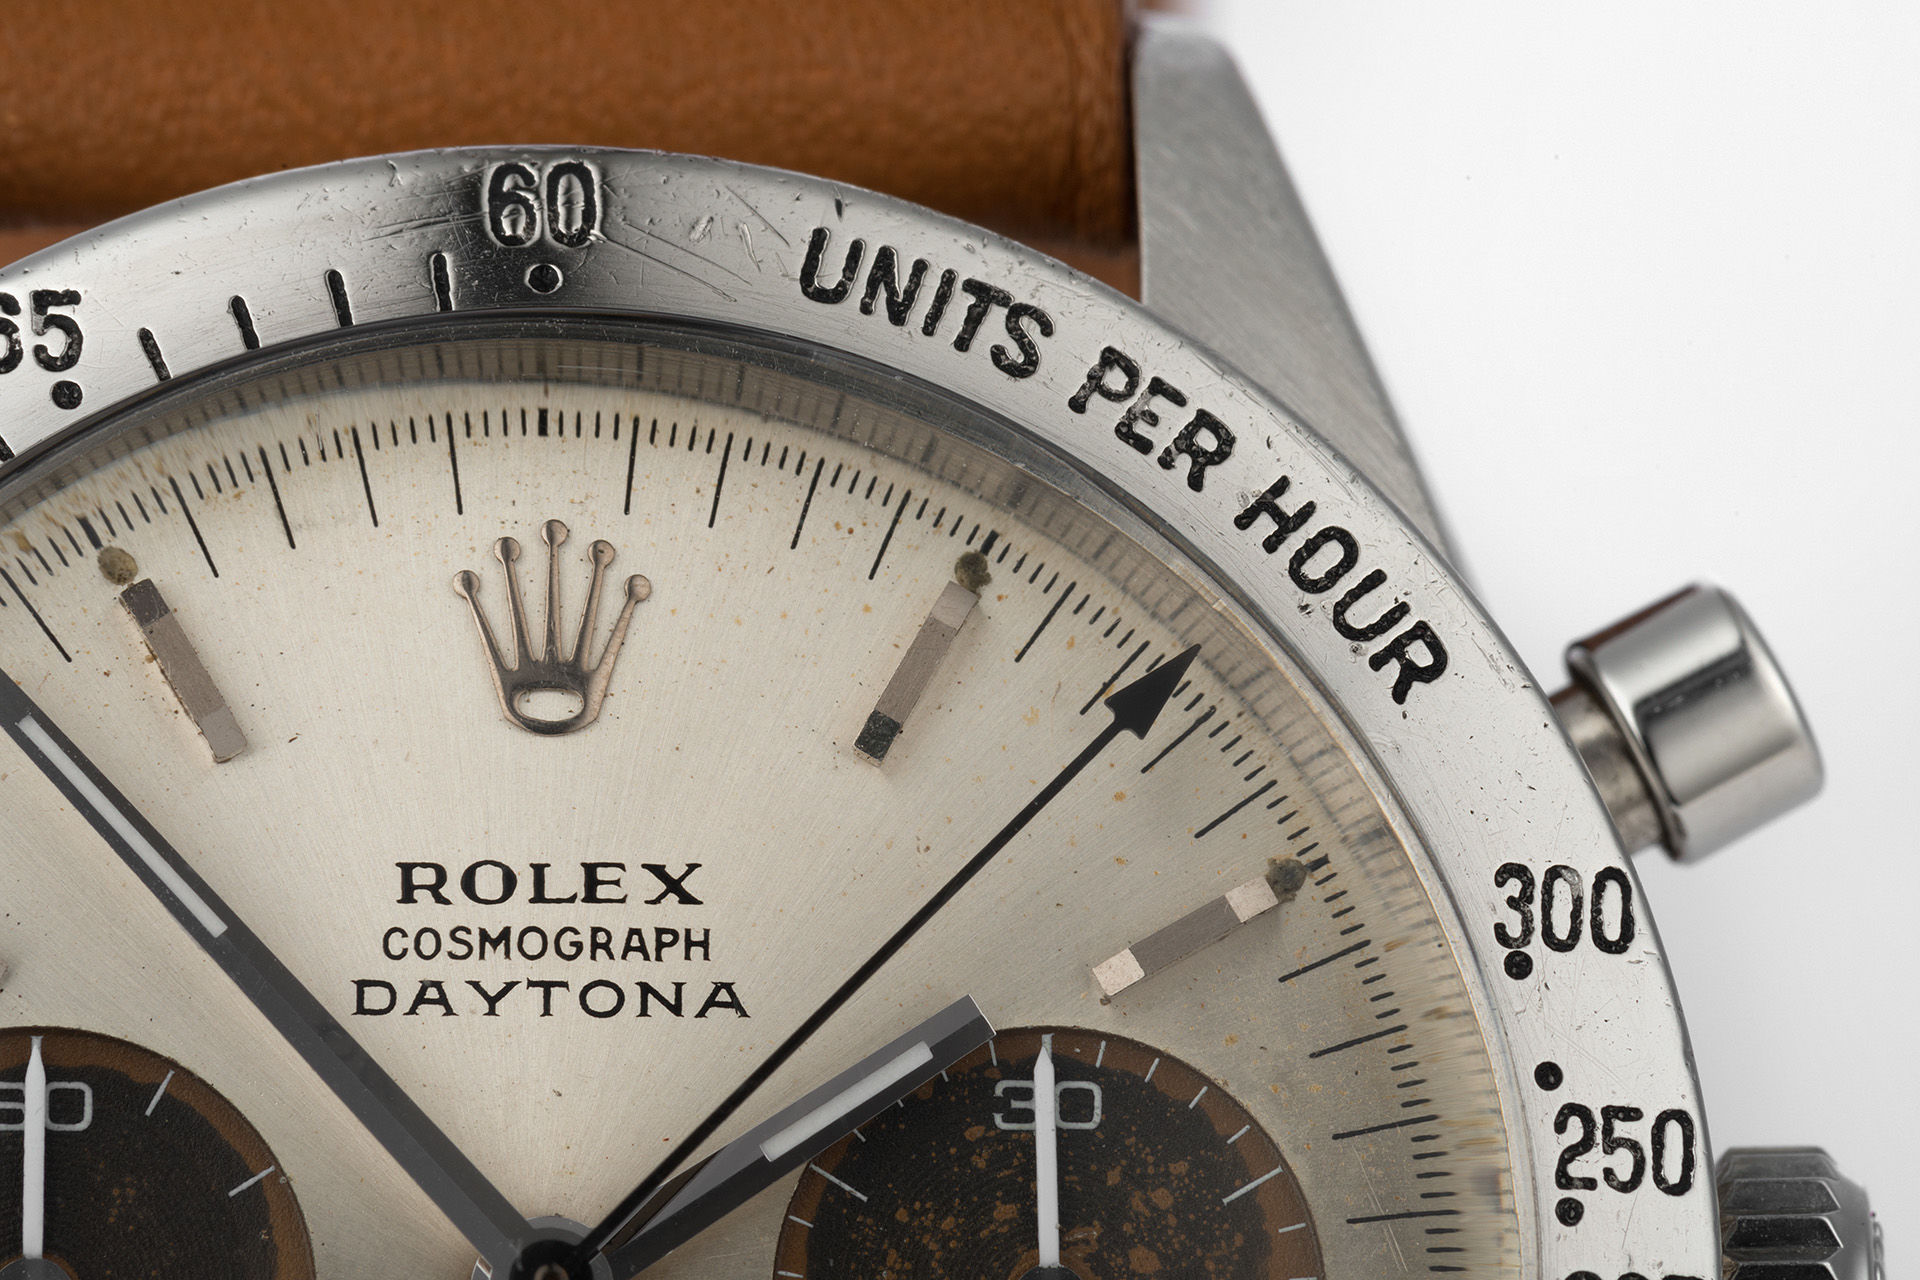 ref 6239 | 'Brown Compax' Original Papers | Rolex Cosmograph Daytona